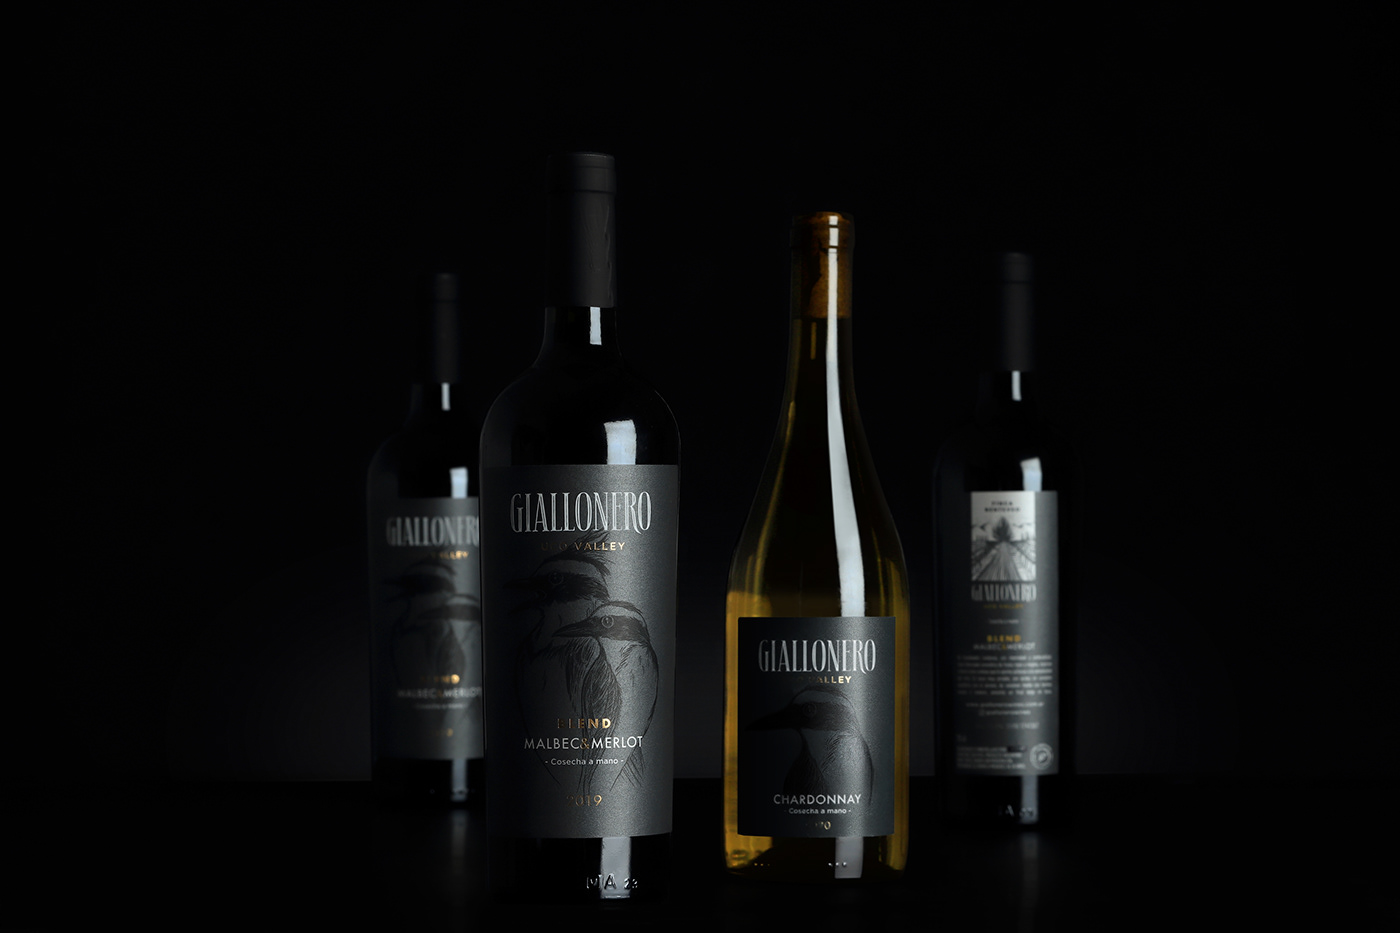 Wine label set. Group of 4 bottles showing the designs.